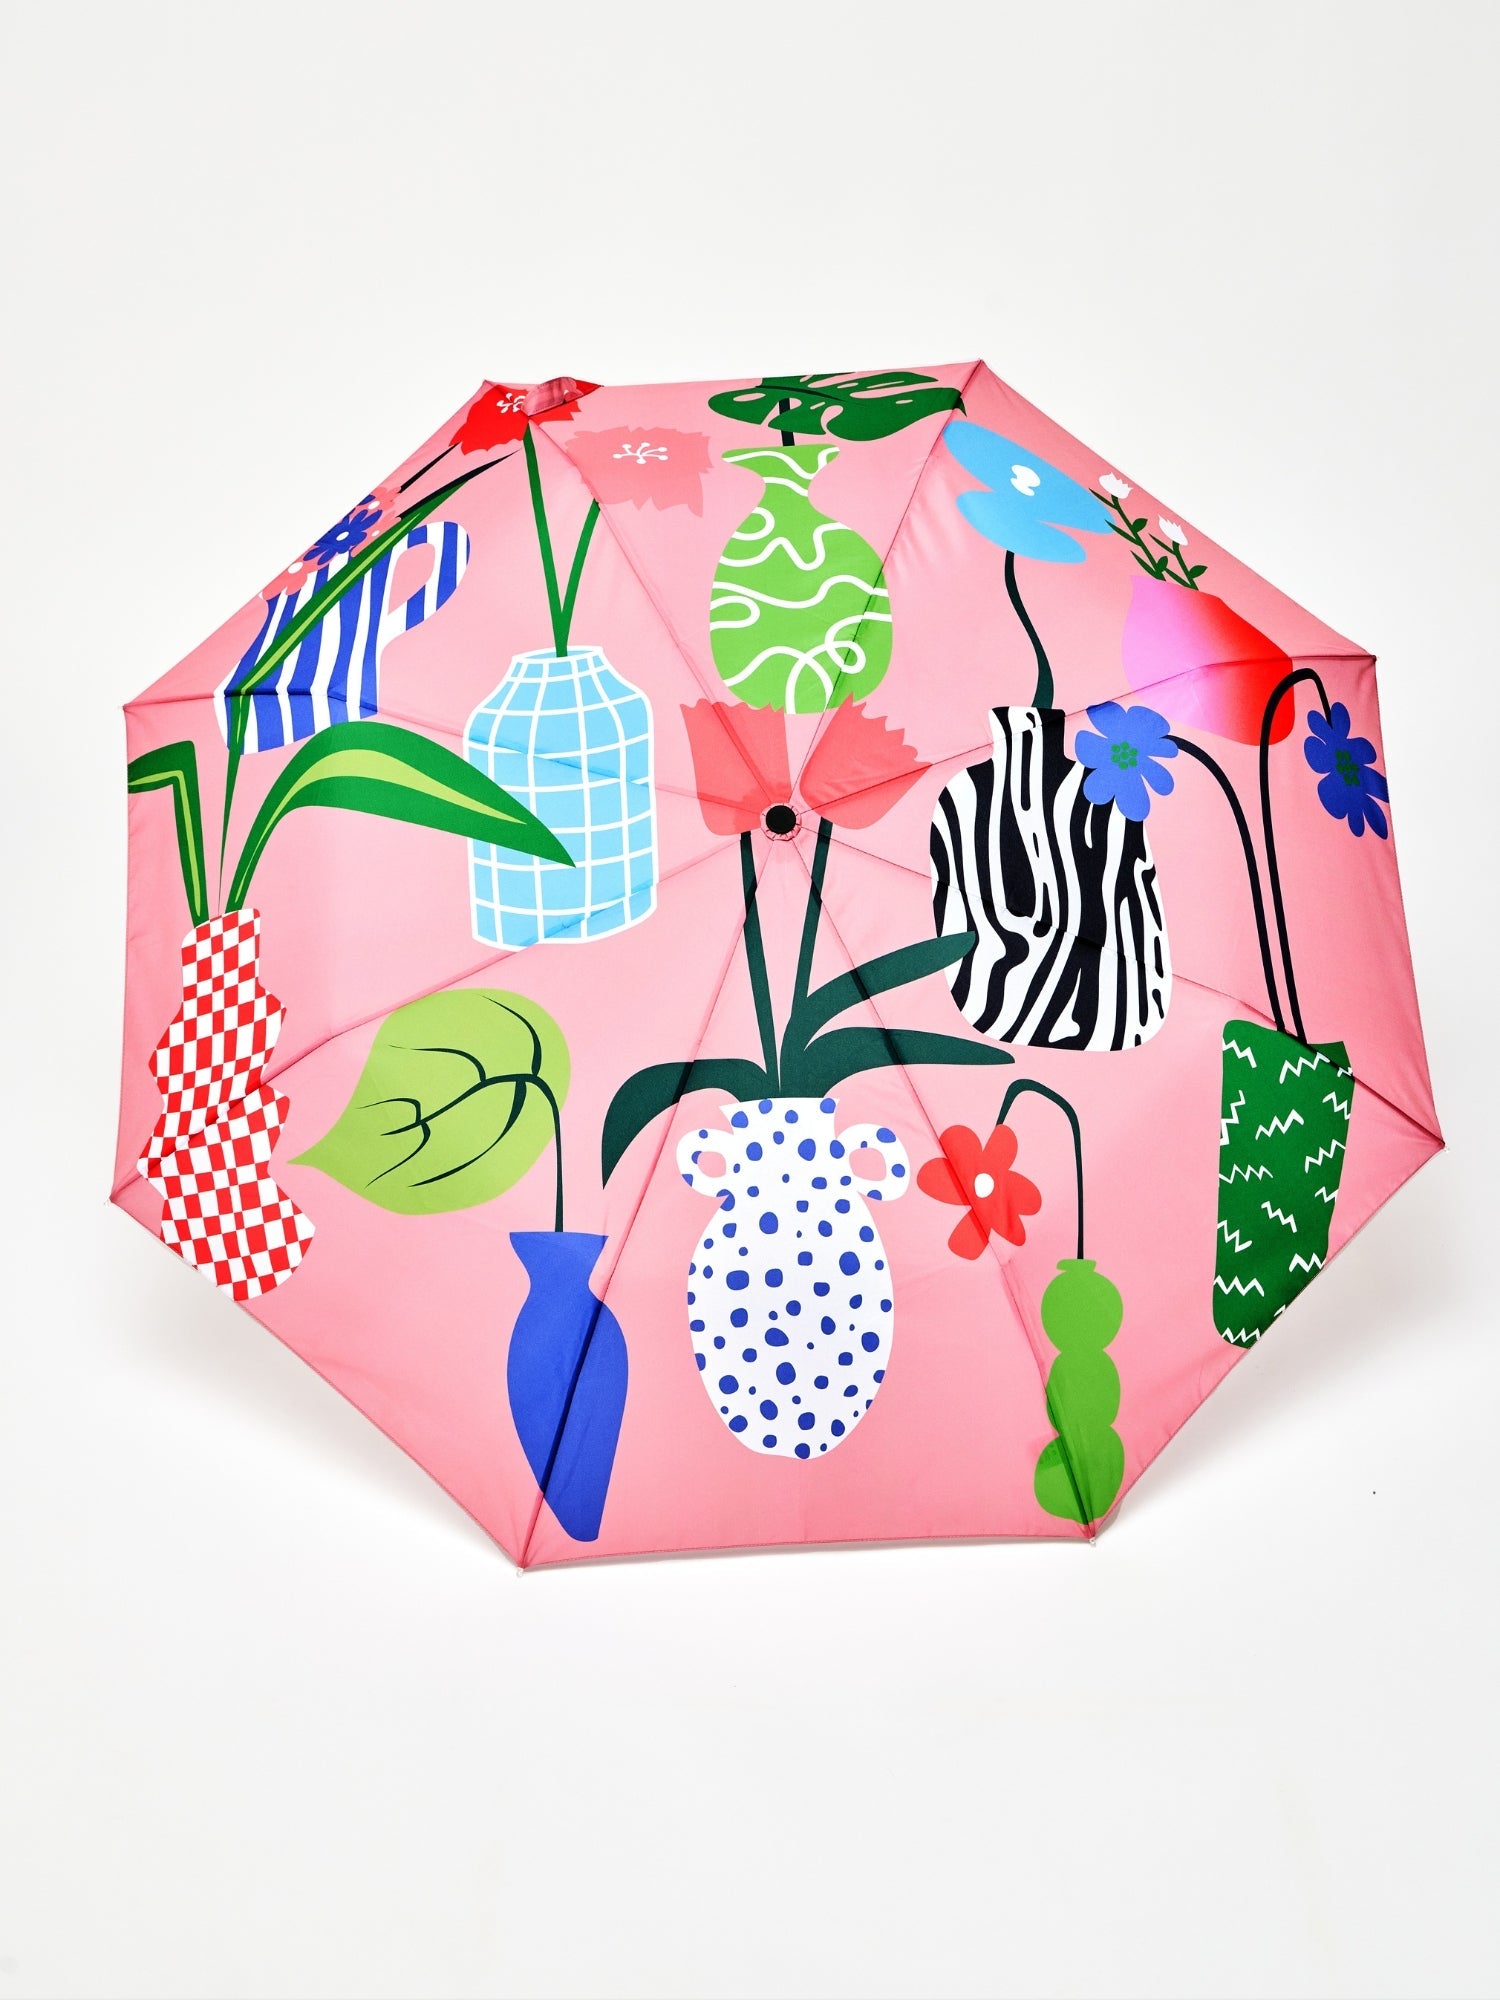 ORIGINAL DUCKHEAD Compact Umbrella in Vases available at Lahn.shop